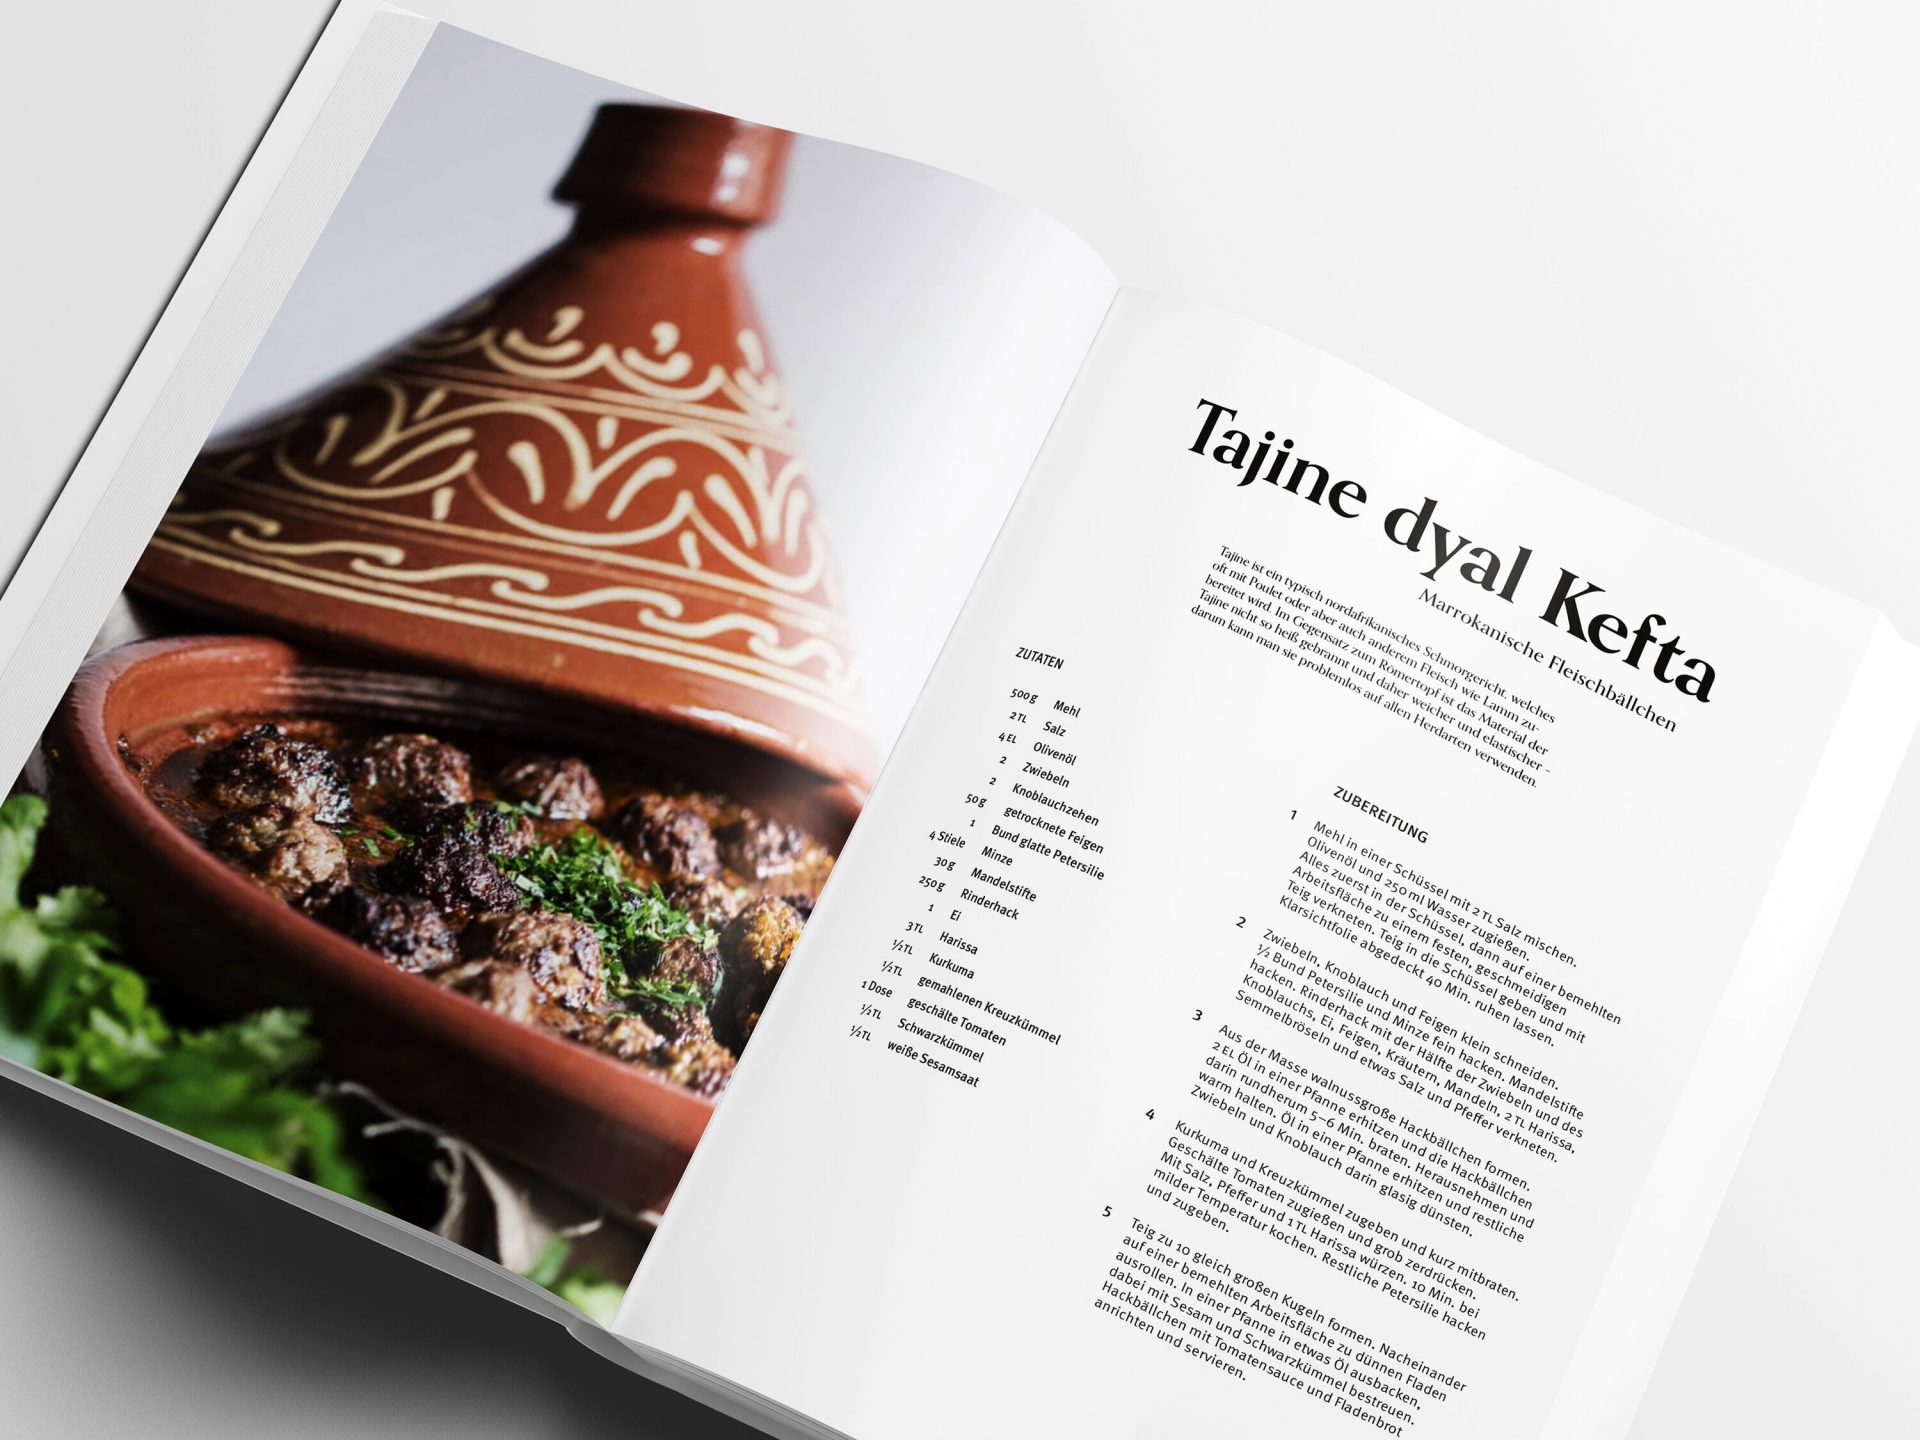 Kochbuch Gestaltung & Editorial Design